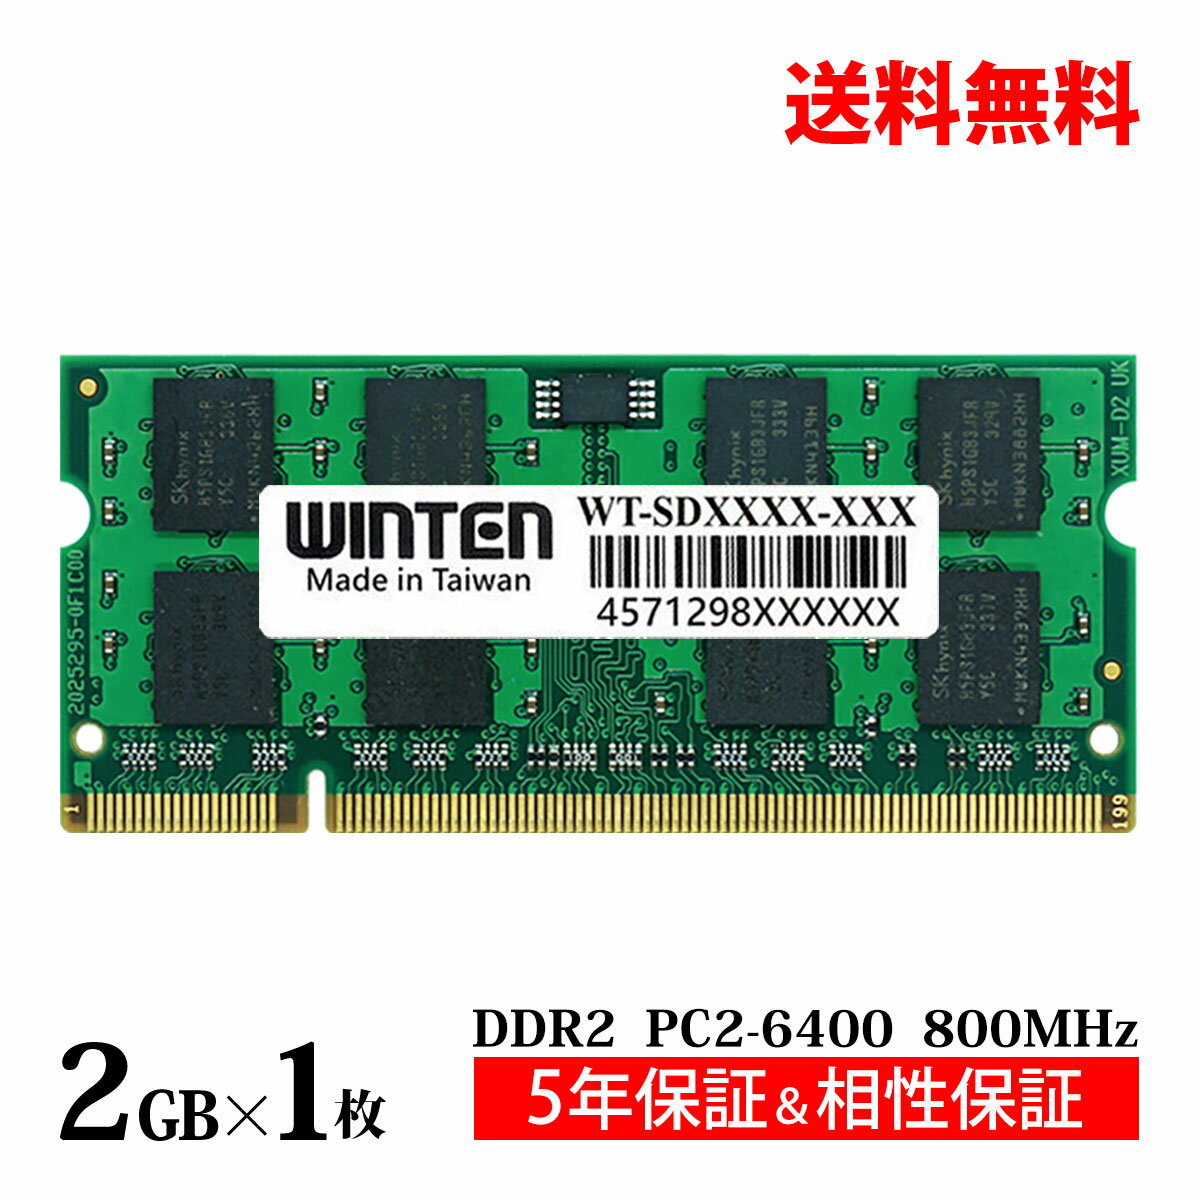 0130-m[gPCp  2GB PC2-6400(DDR2 800) WT-SD800-2GB ۏ i5Nۏ   o DDR2 SDRAM SO-DIMM [ ݃[